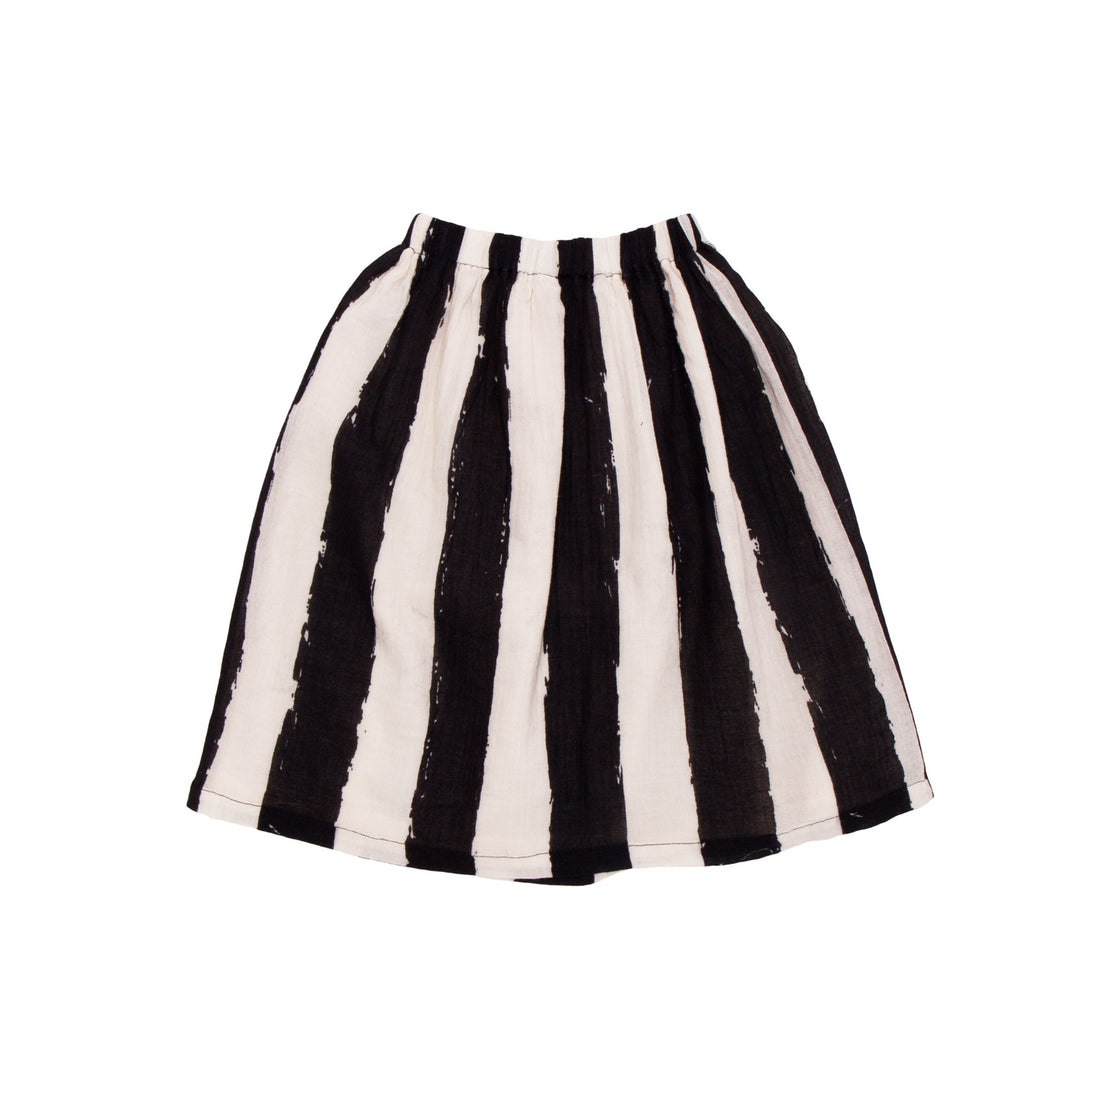 Noe & Zoe Black Stripes XL Maxi Skirt